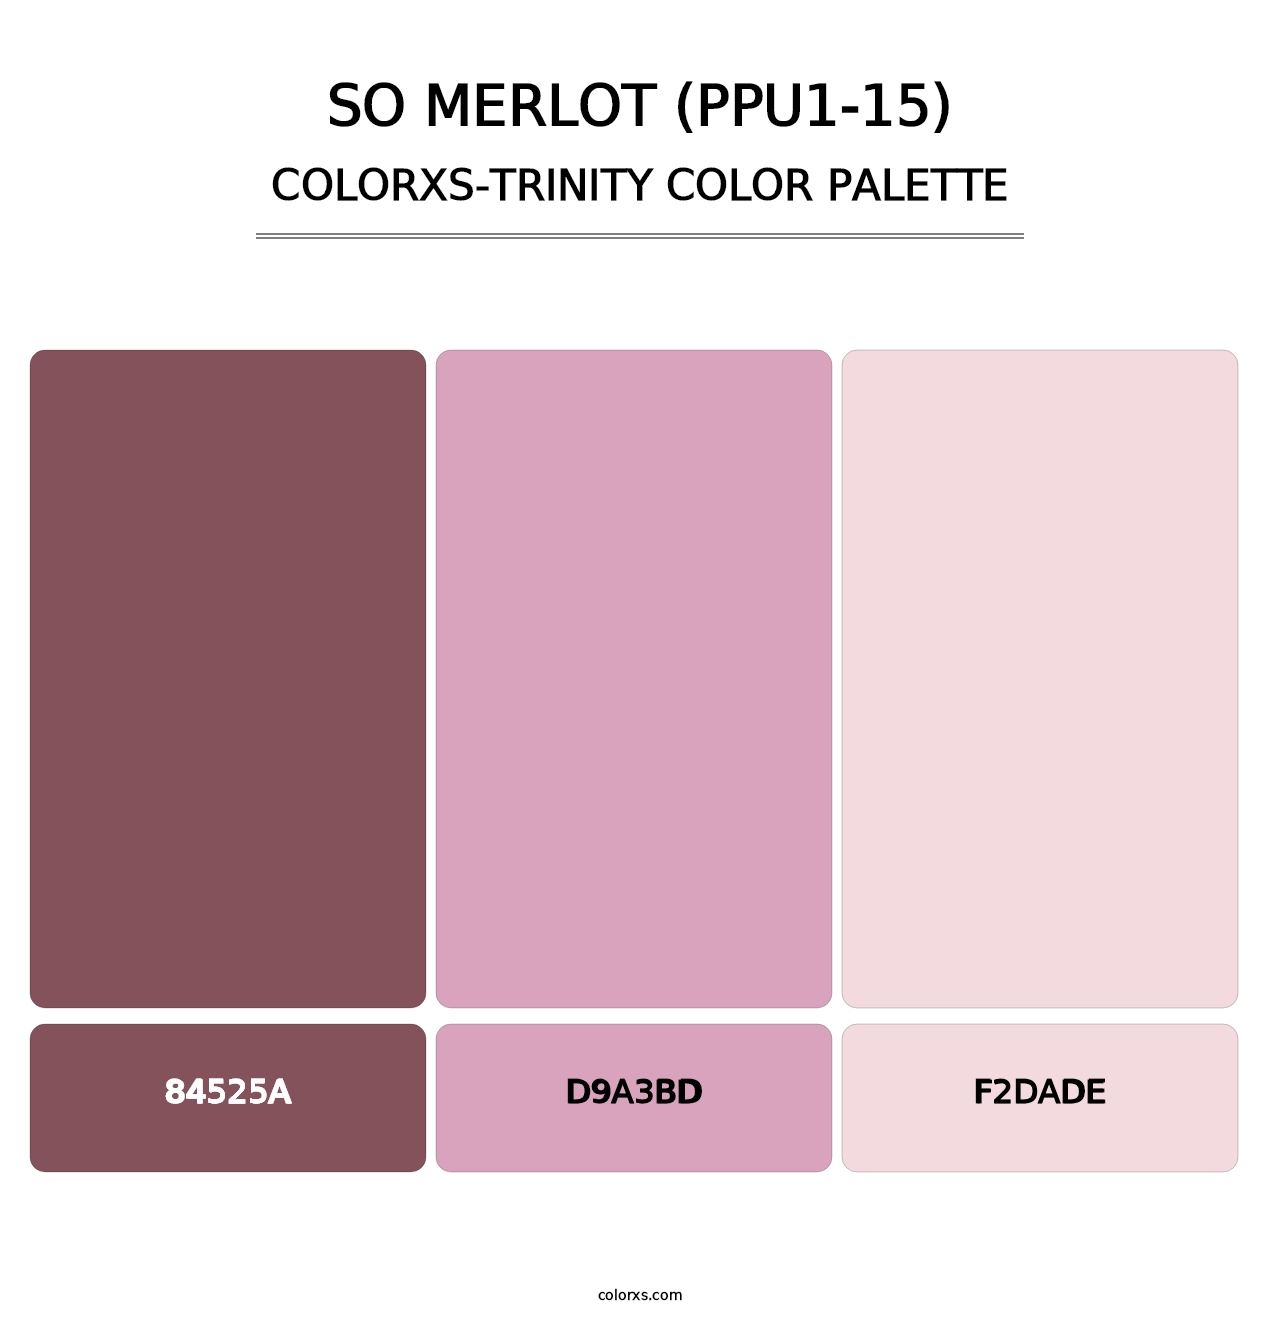 So Merlot (PPU1-15) - Colorxs Trinity Palette